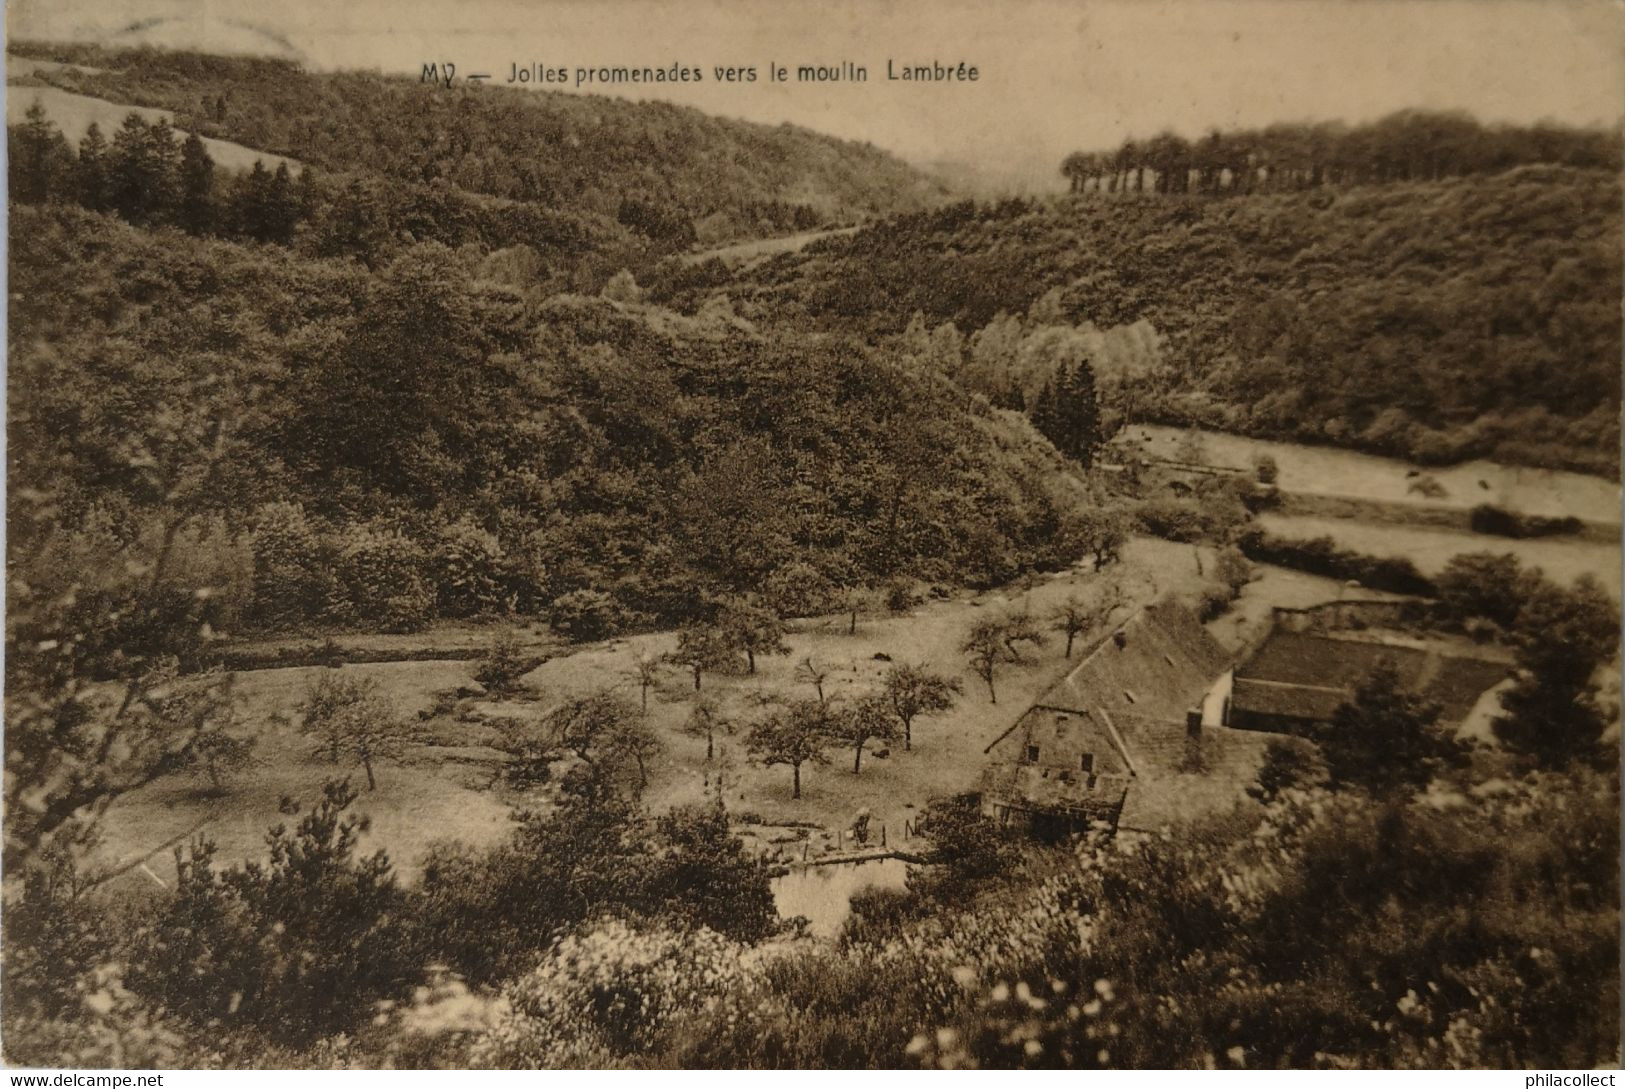 My (Ferrieres) Jolies Promenades Vers Le Moulin Lambree 1928 Ed. Desaix - Ferrieres